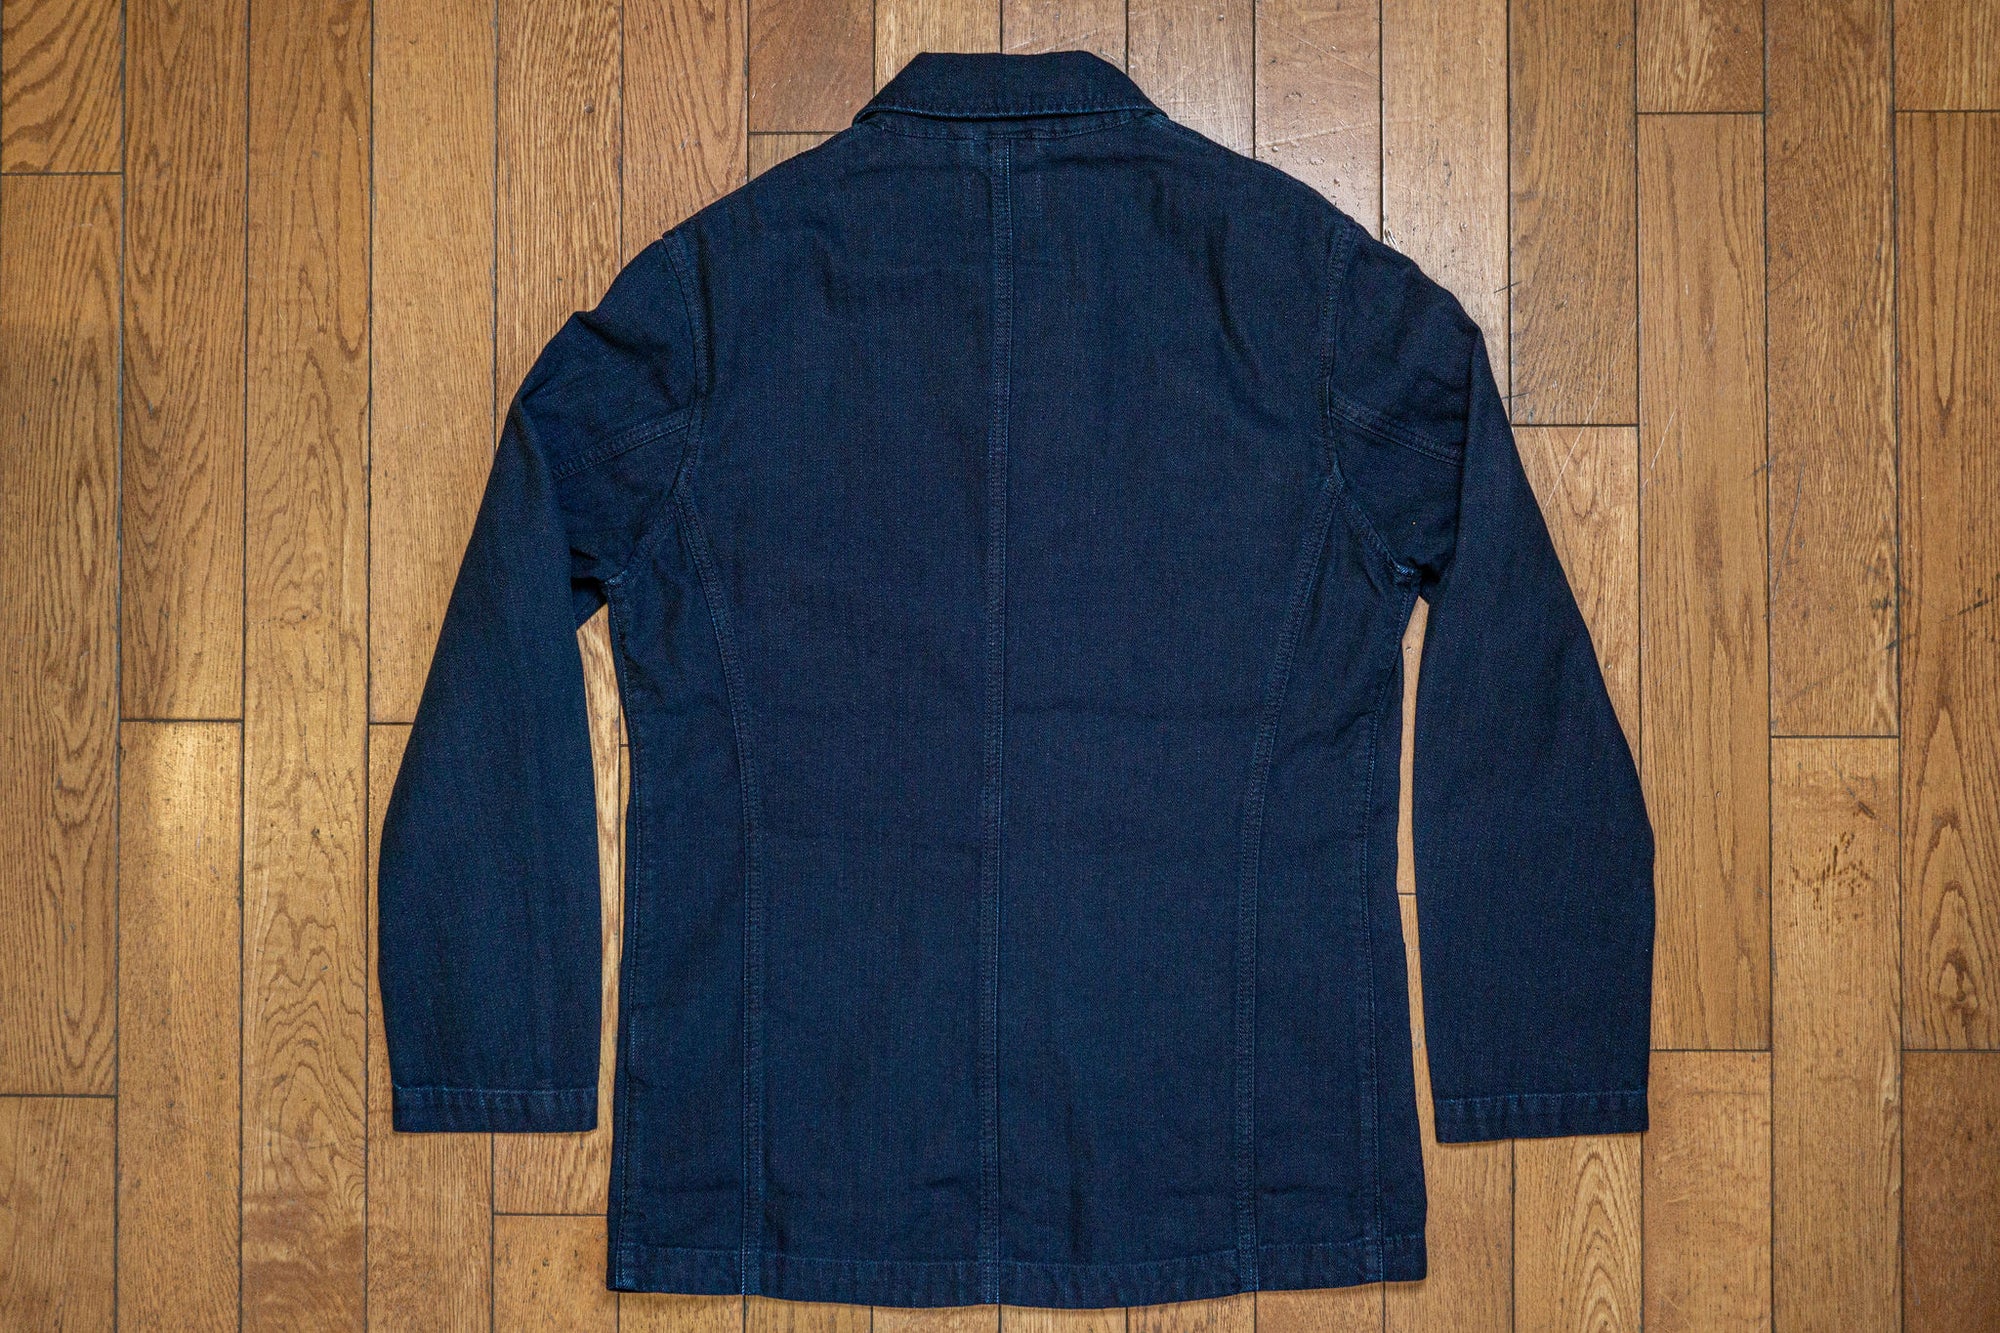 C.O.F. Studio Brewer Jacket - Vintage Blue Stripe Rinsed